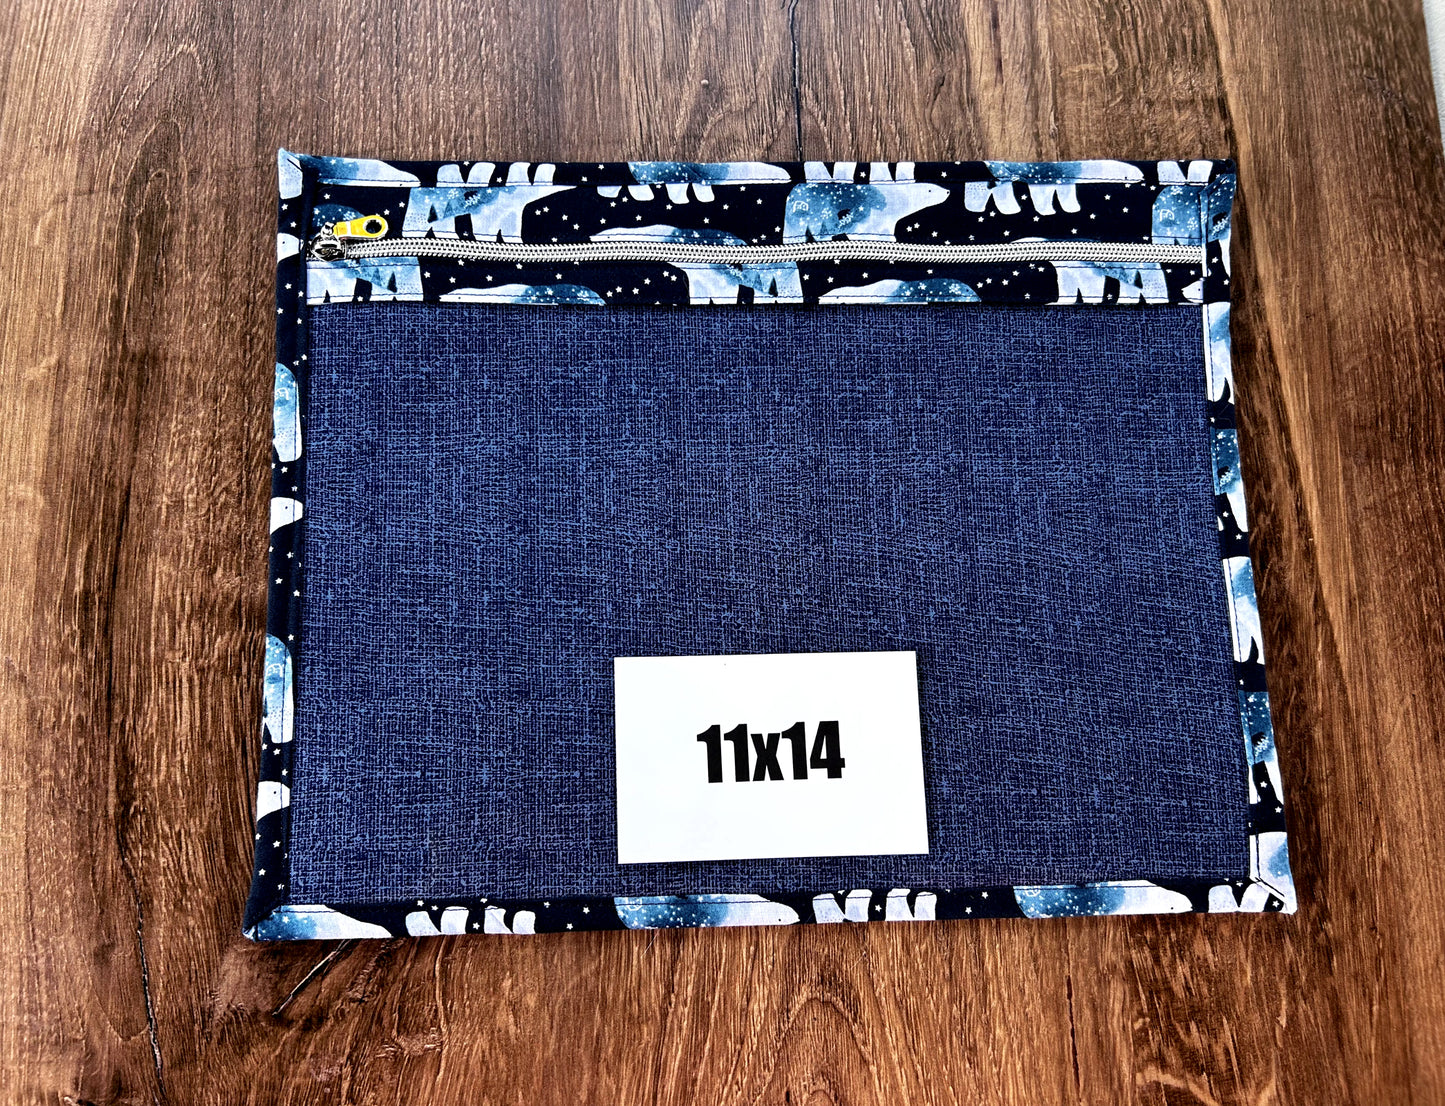 Vinyl Cross Stitch Project Bag - Embroidery bag - Project Bag - Knitting & Crochet Bag - Storage - Organizer - Notions - Polar Bear